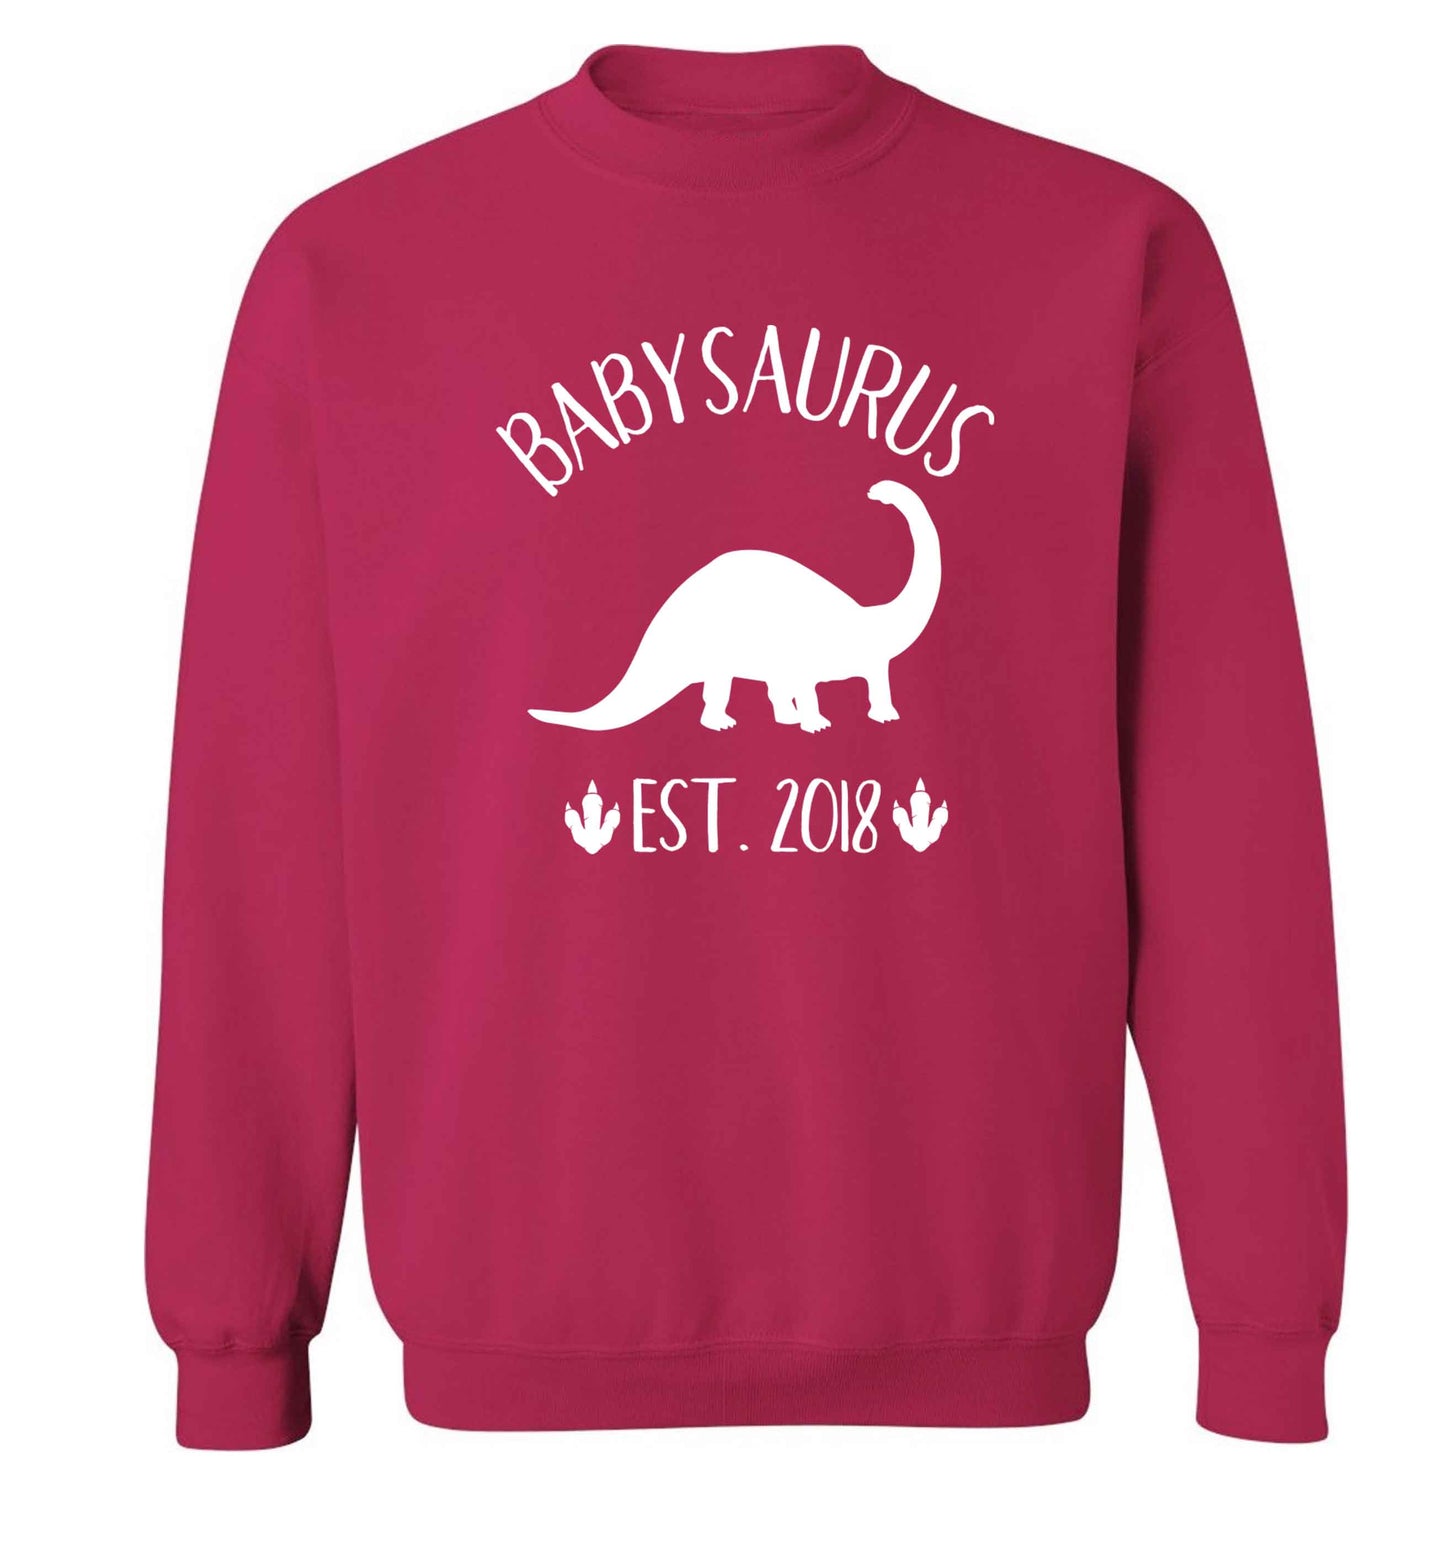 Personalised babysaurus since (custom date) Adult's unisex pink Sweater 2XL